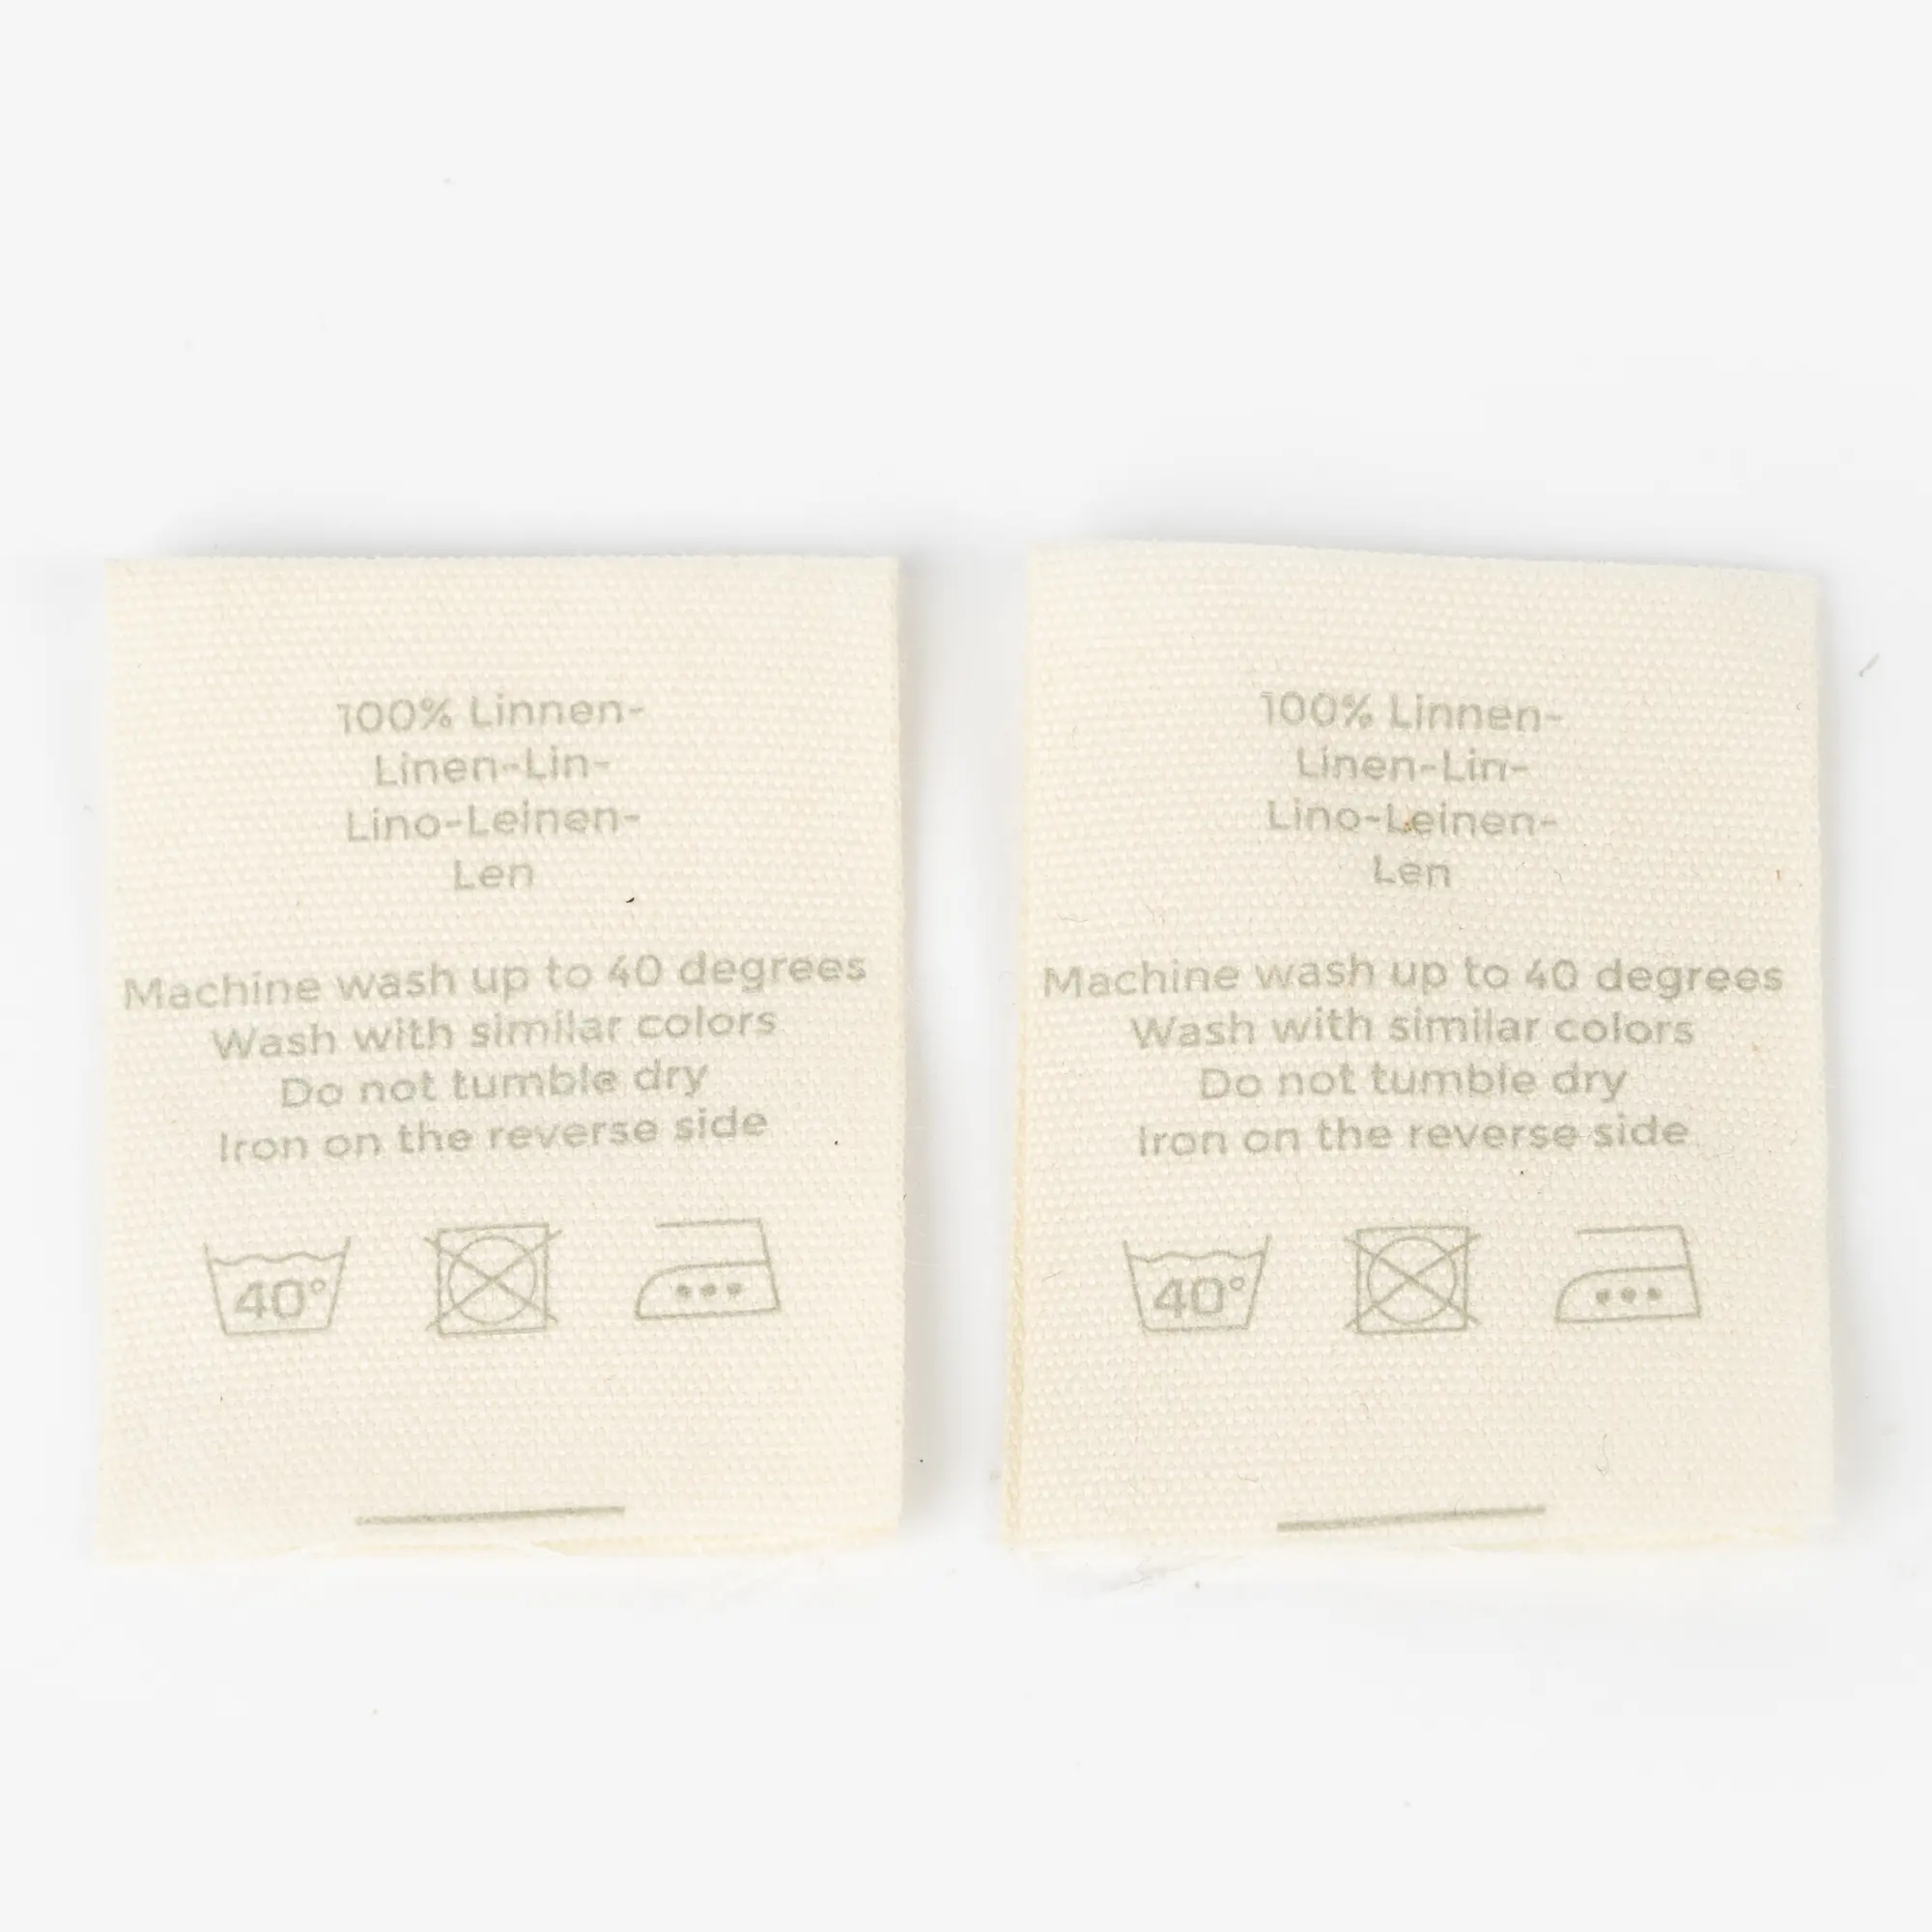 Etichette tessute su misura di alta qualità dell'indumento etichette su misura per gli indumenti.